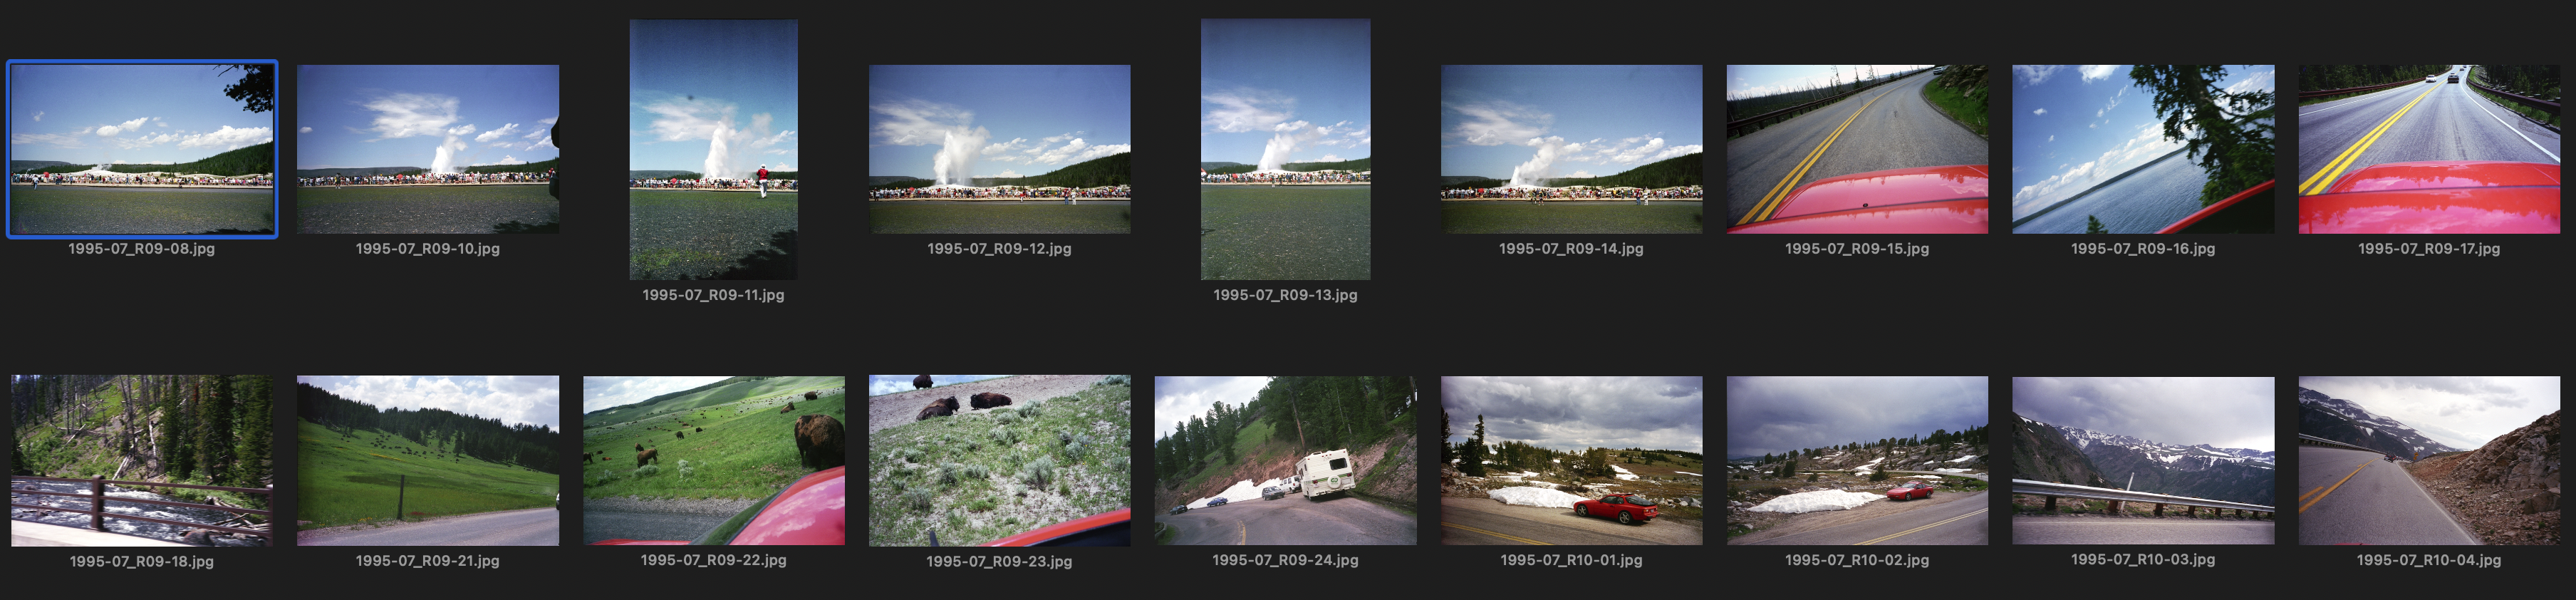 Yellowstone photos 1995